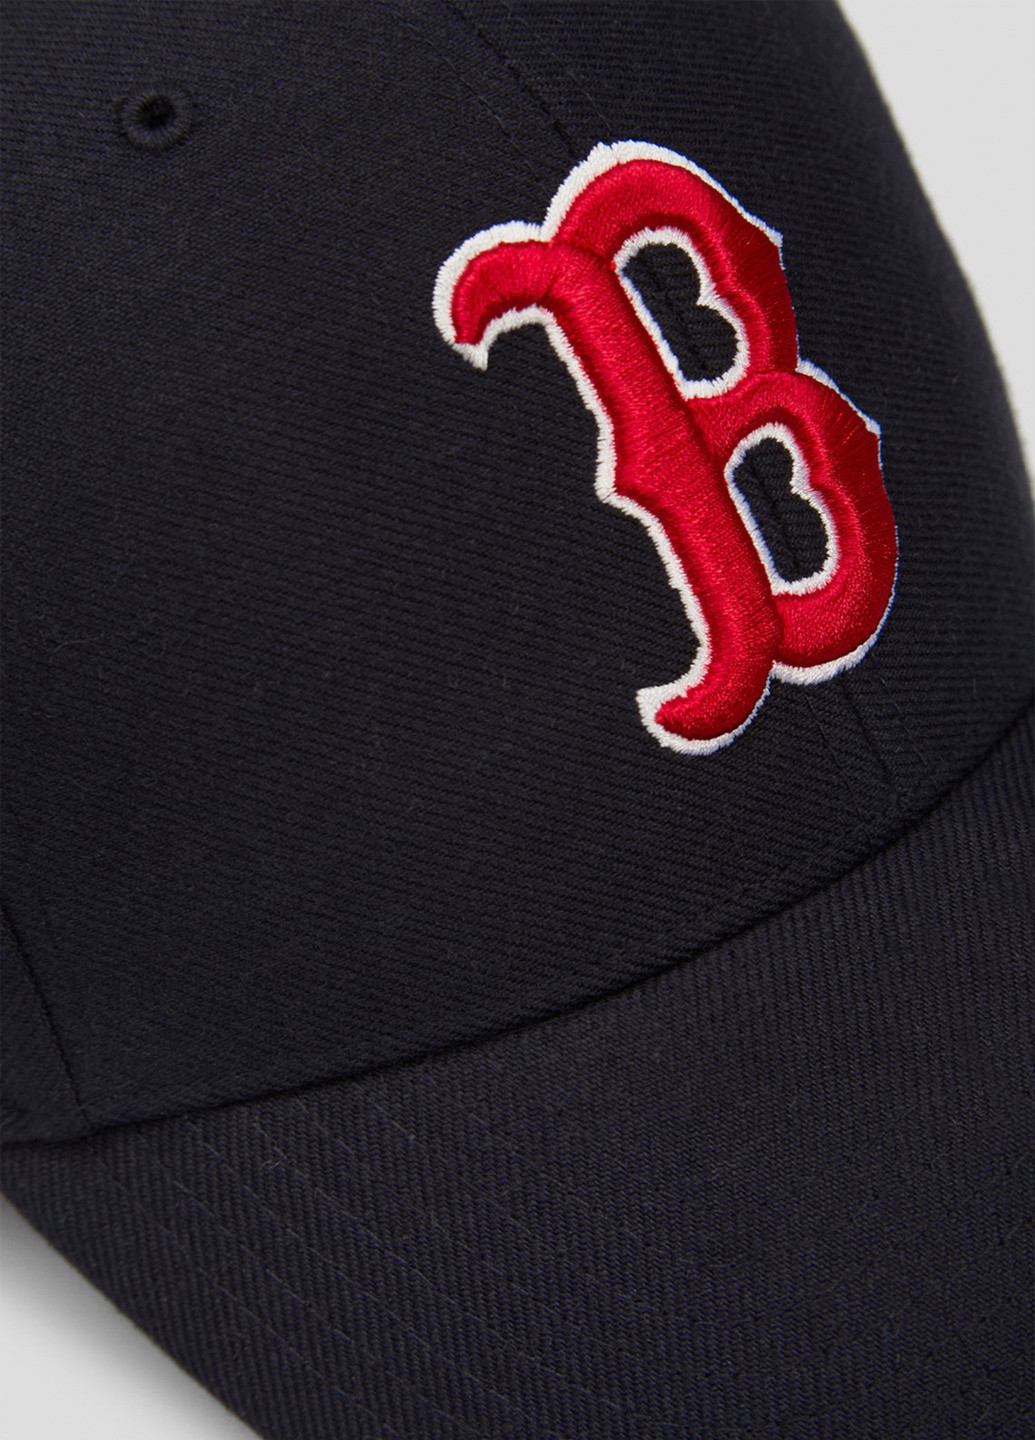 Черная кепка Mlb Boston Red Sox с нашивкой 47 Brand (253563801)